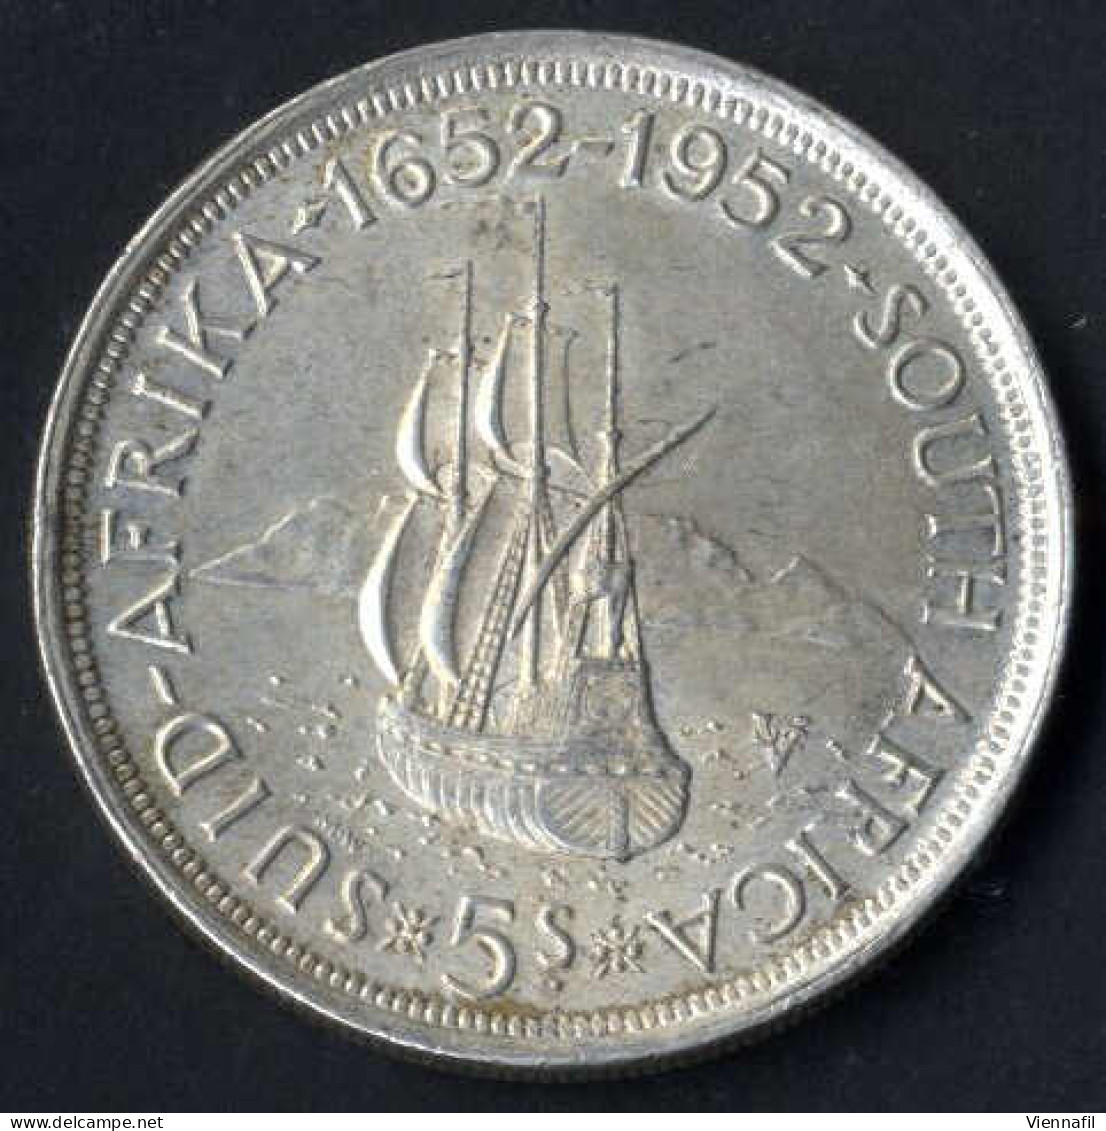 5, 2 Shillings, 1 Penny, Silbermedaille anläßlich der Krönung 1937, Lot mit vier Silbermünzen/medaillen (Fein 69 Gr.) un